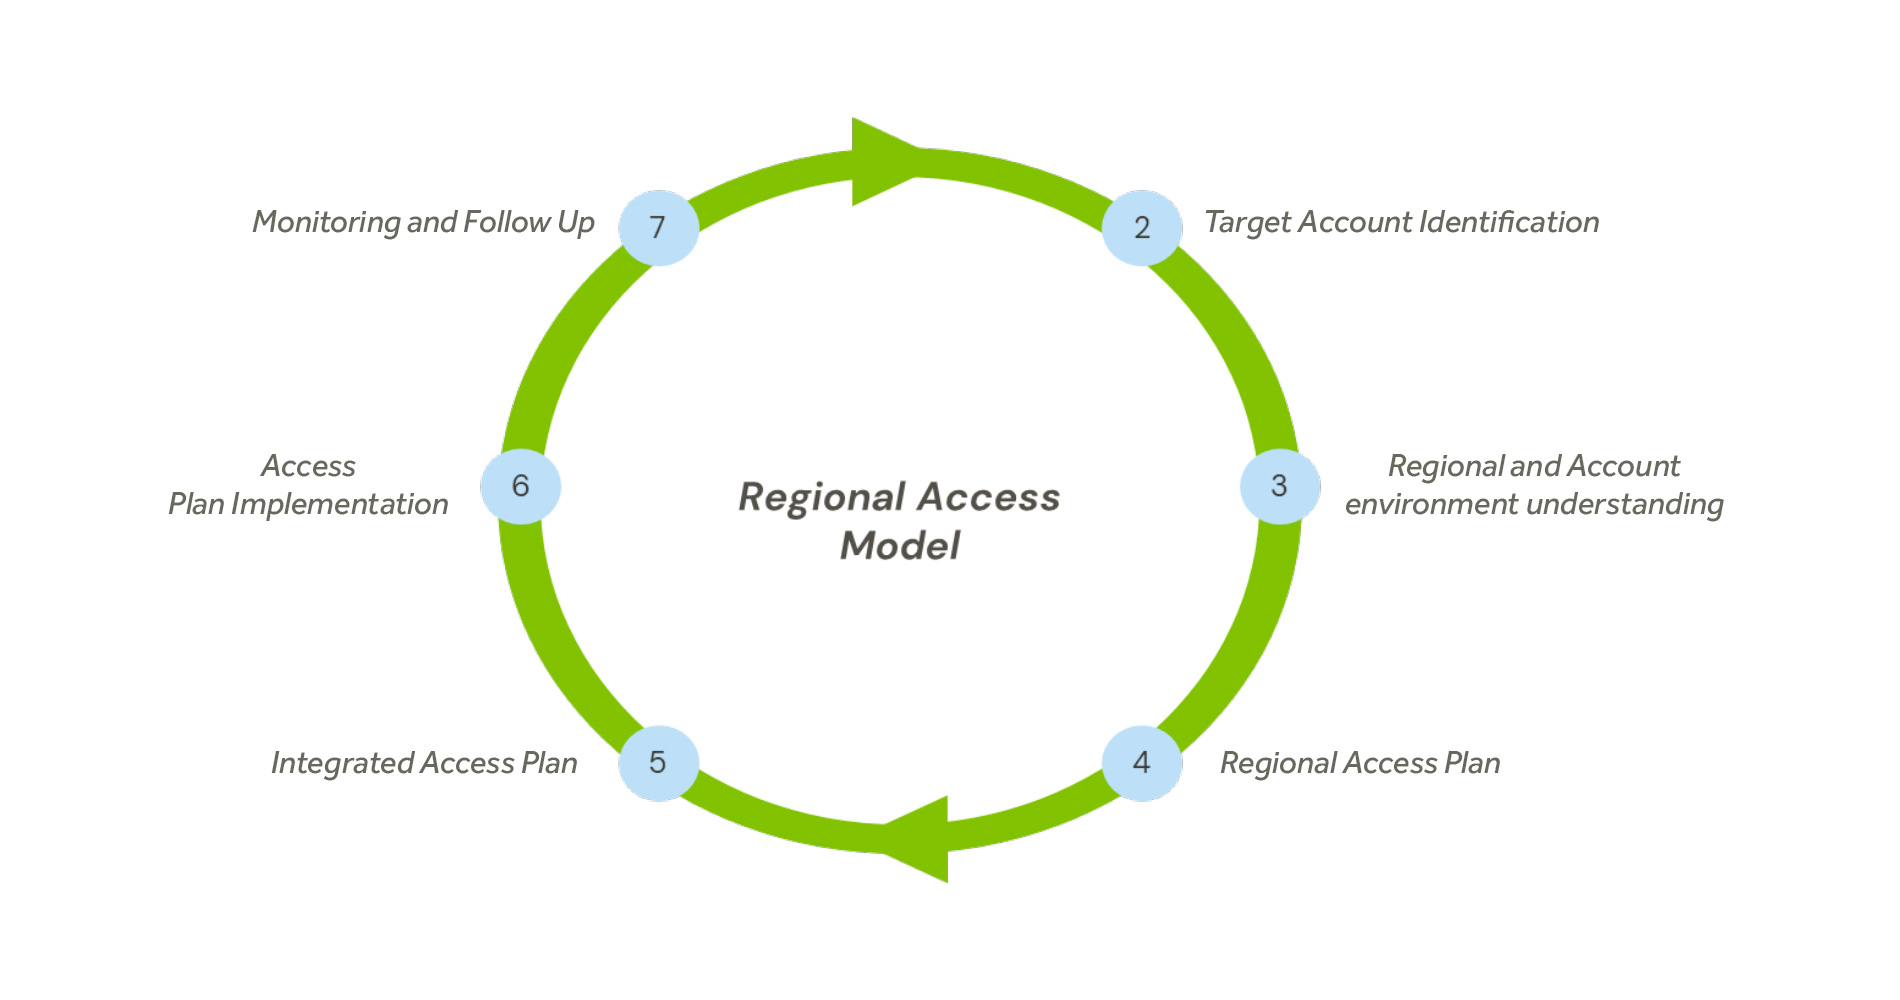 Regional Account Access Model